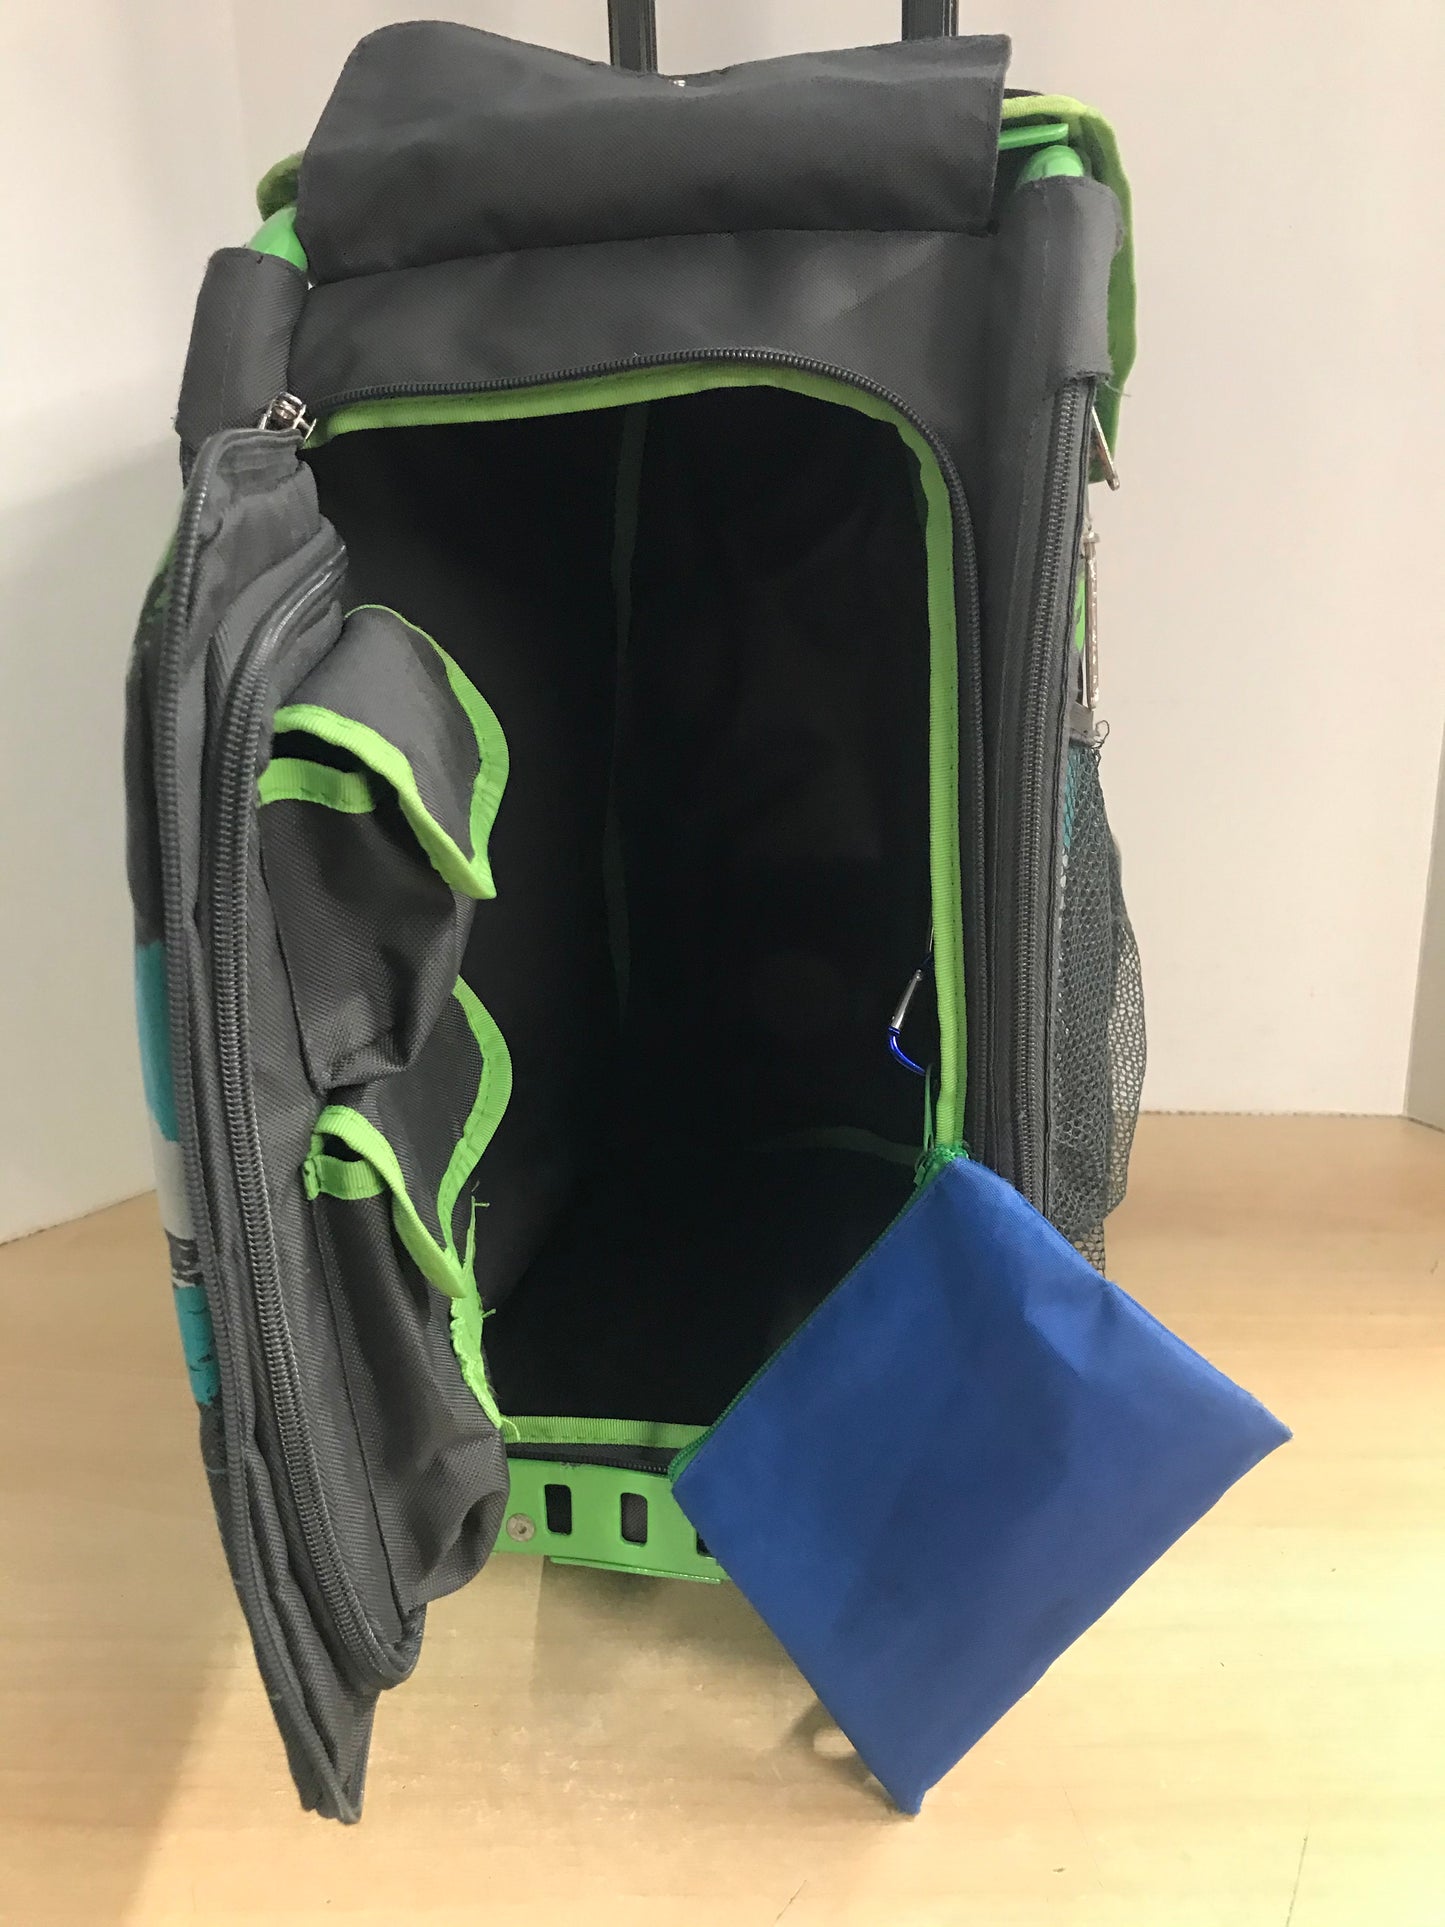 Zuka 20 inch Sports Insert Travel Carry On School Bag Double Wheels Steel Frame Outstanding Quality Minor Wear